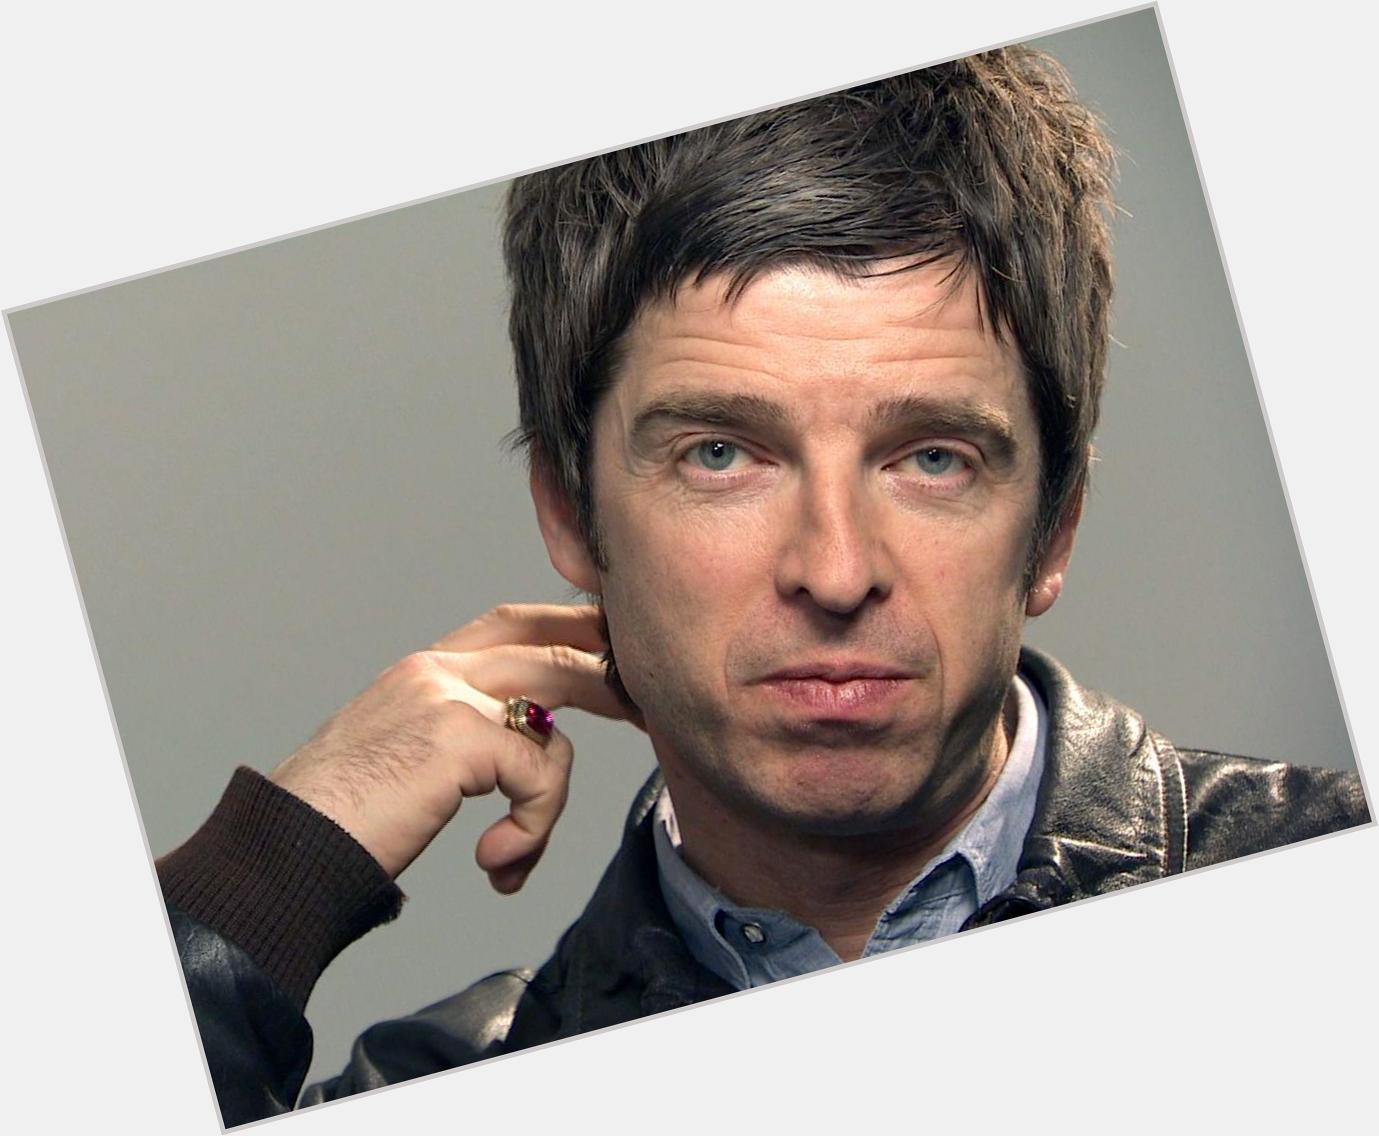 Happy Birthday Mr. Noel Gallagher
Feliz cumpleaños grande en Britpop en 